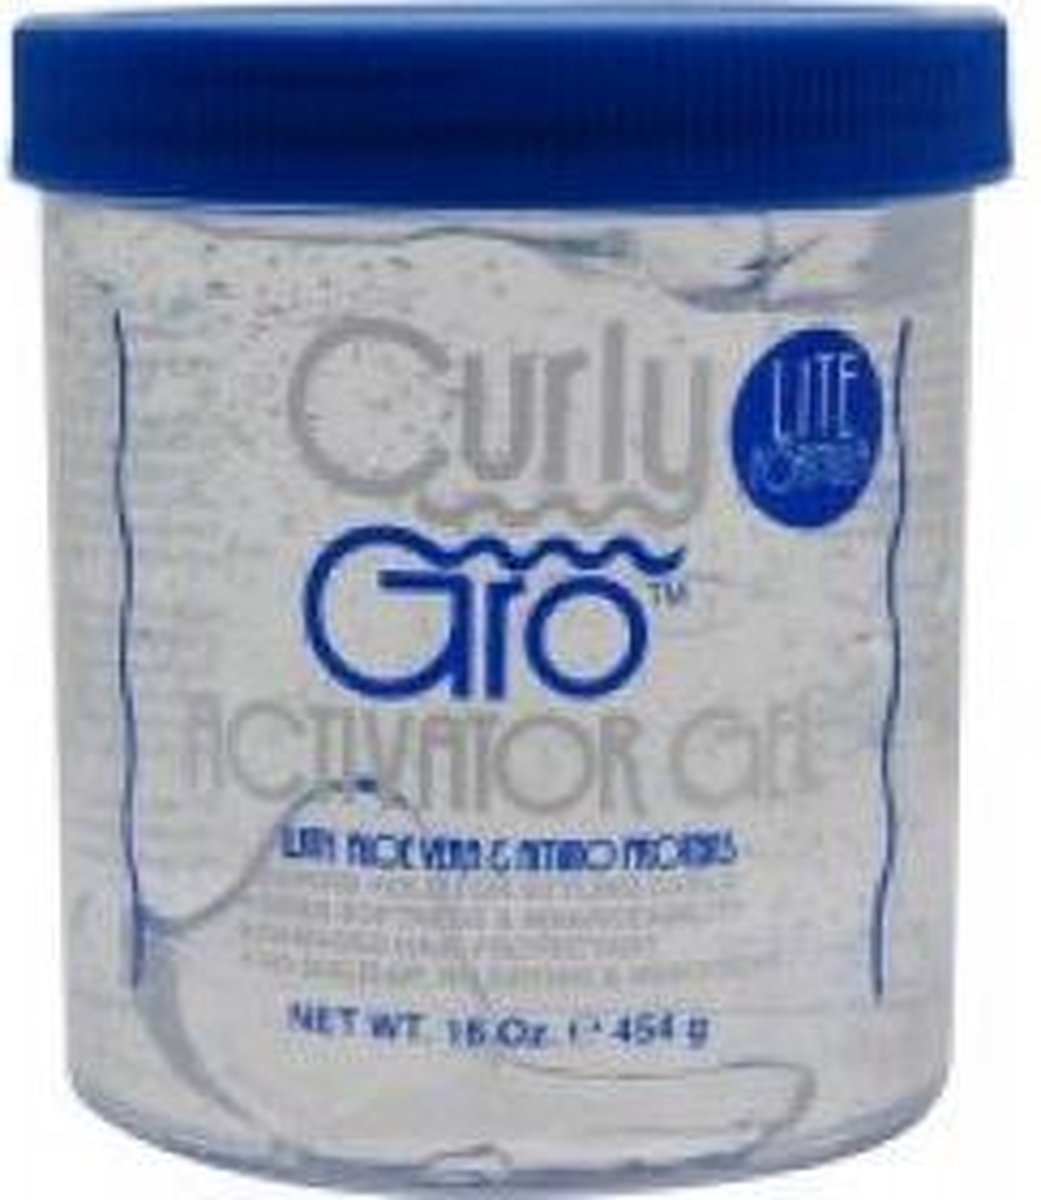 Curly Gro Gel Activator Lite 454gr